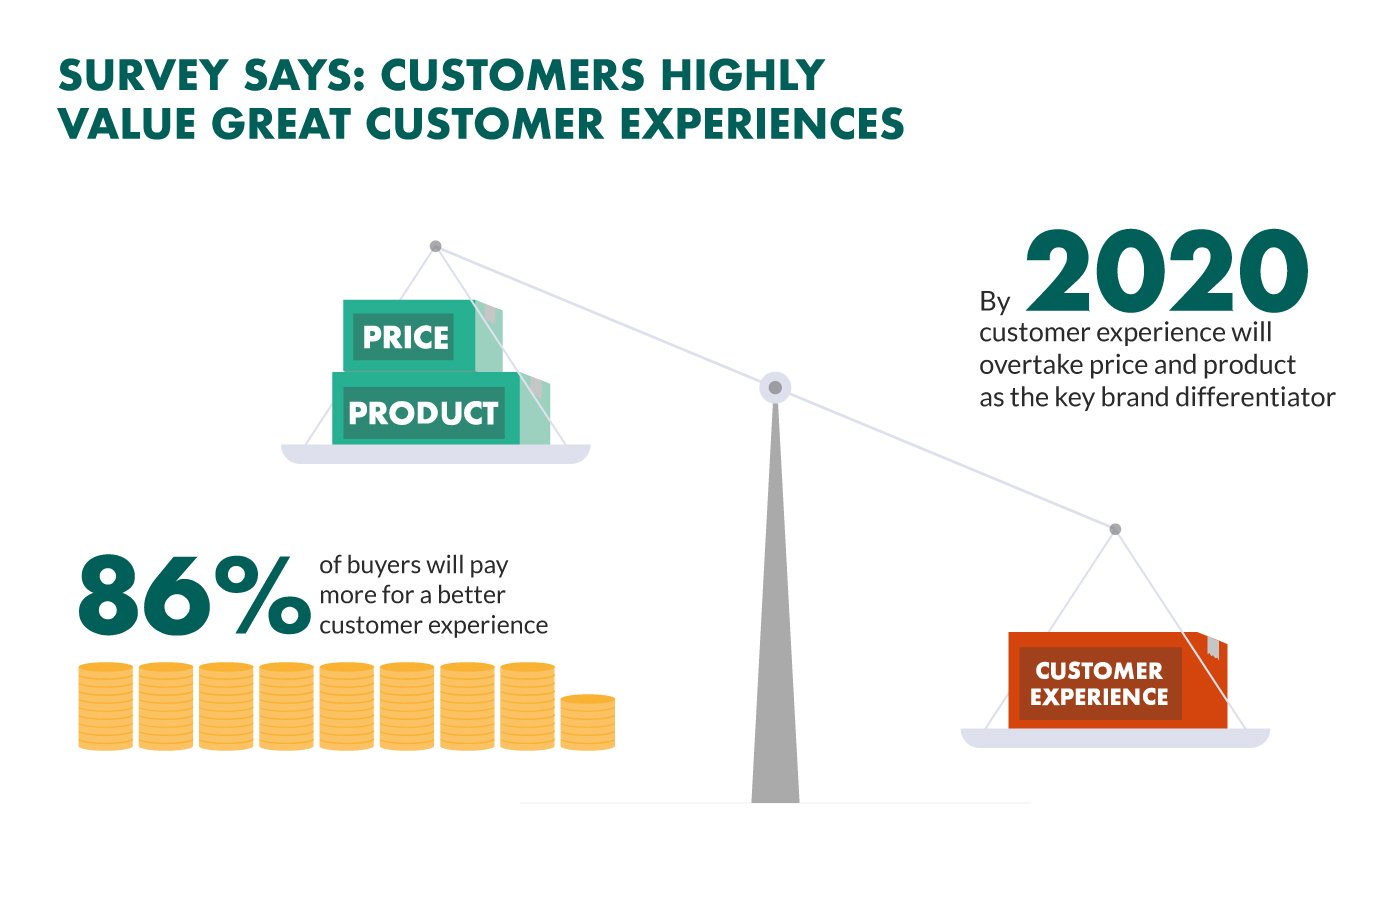 customer experience key brand differentiator